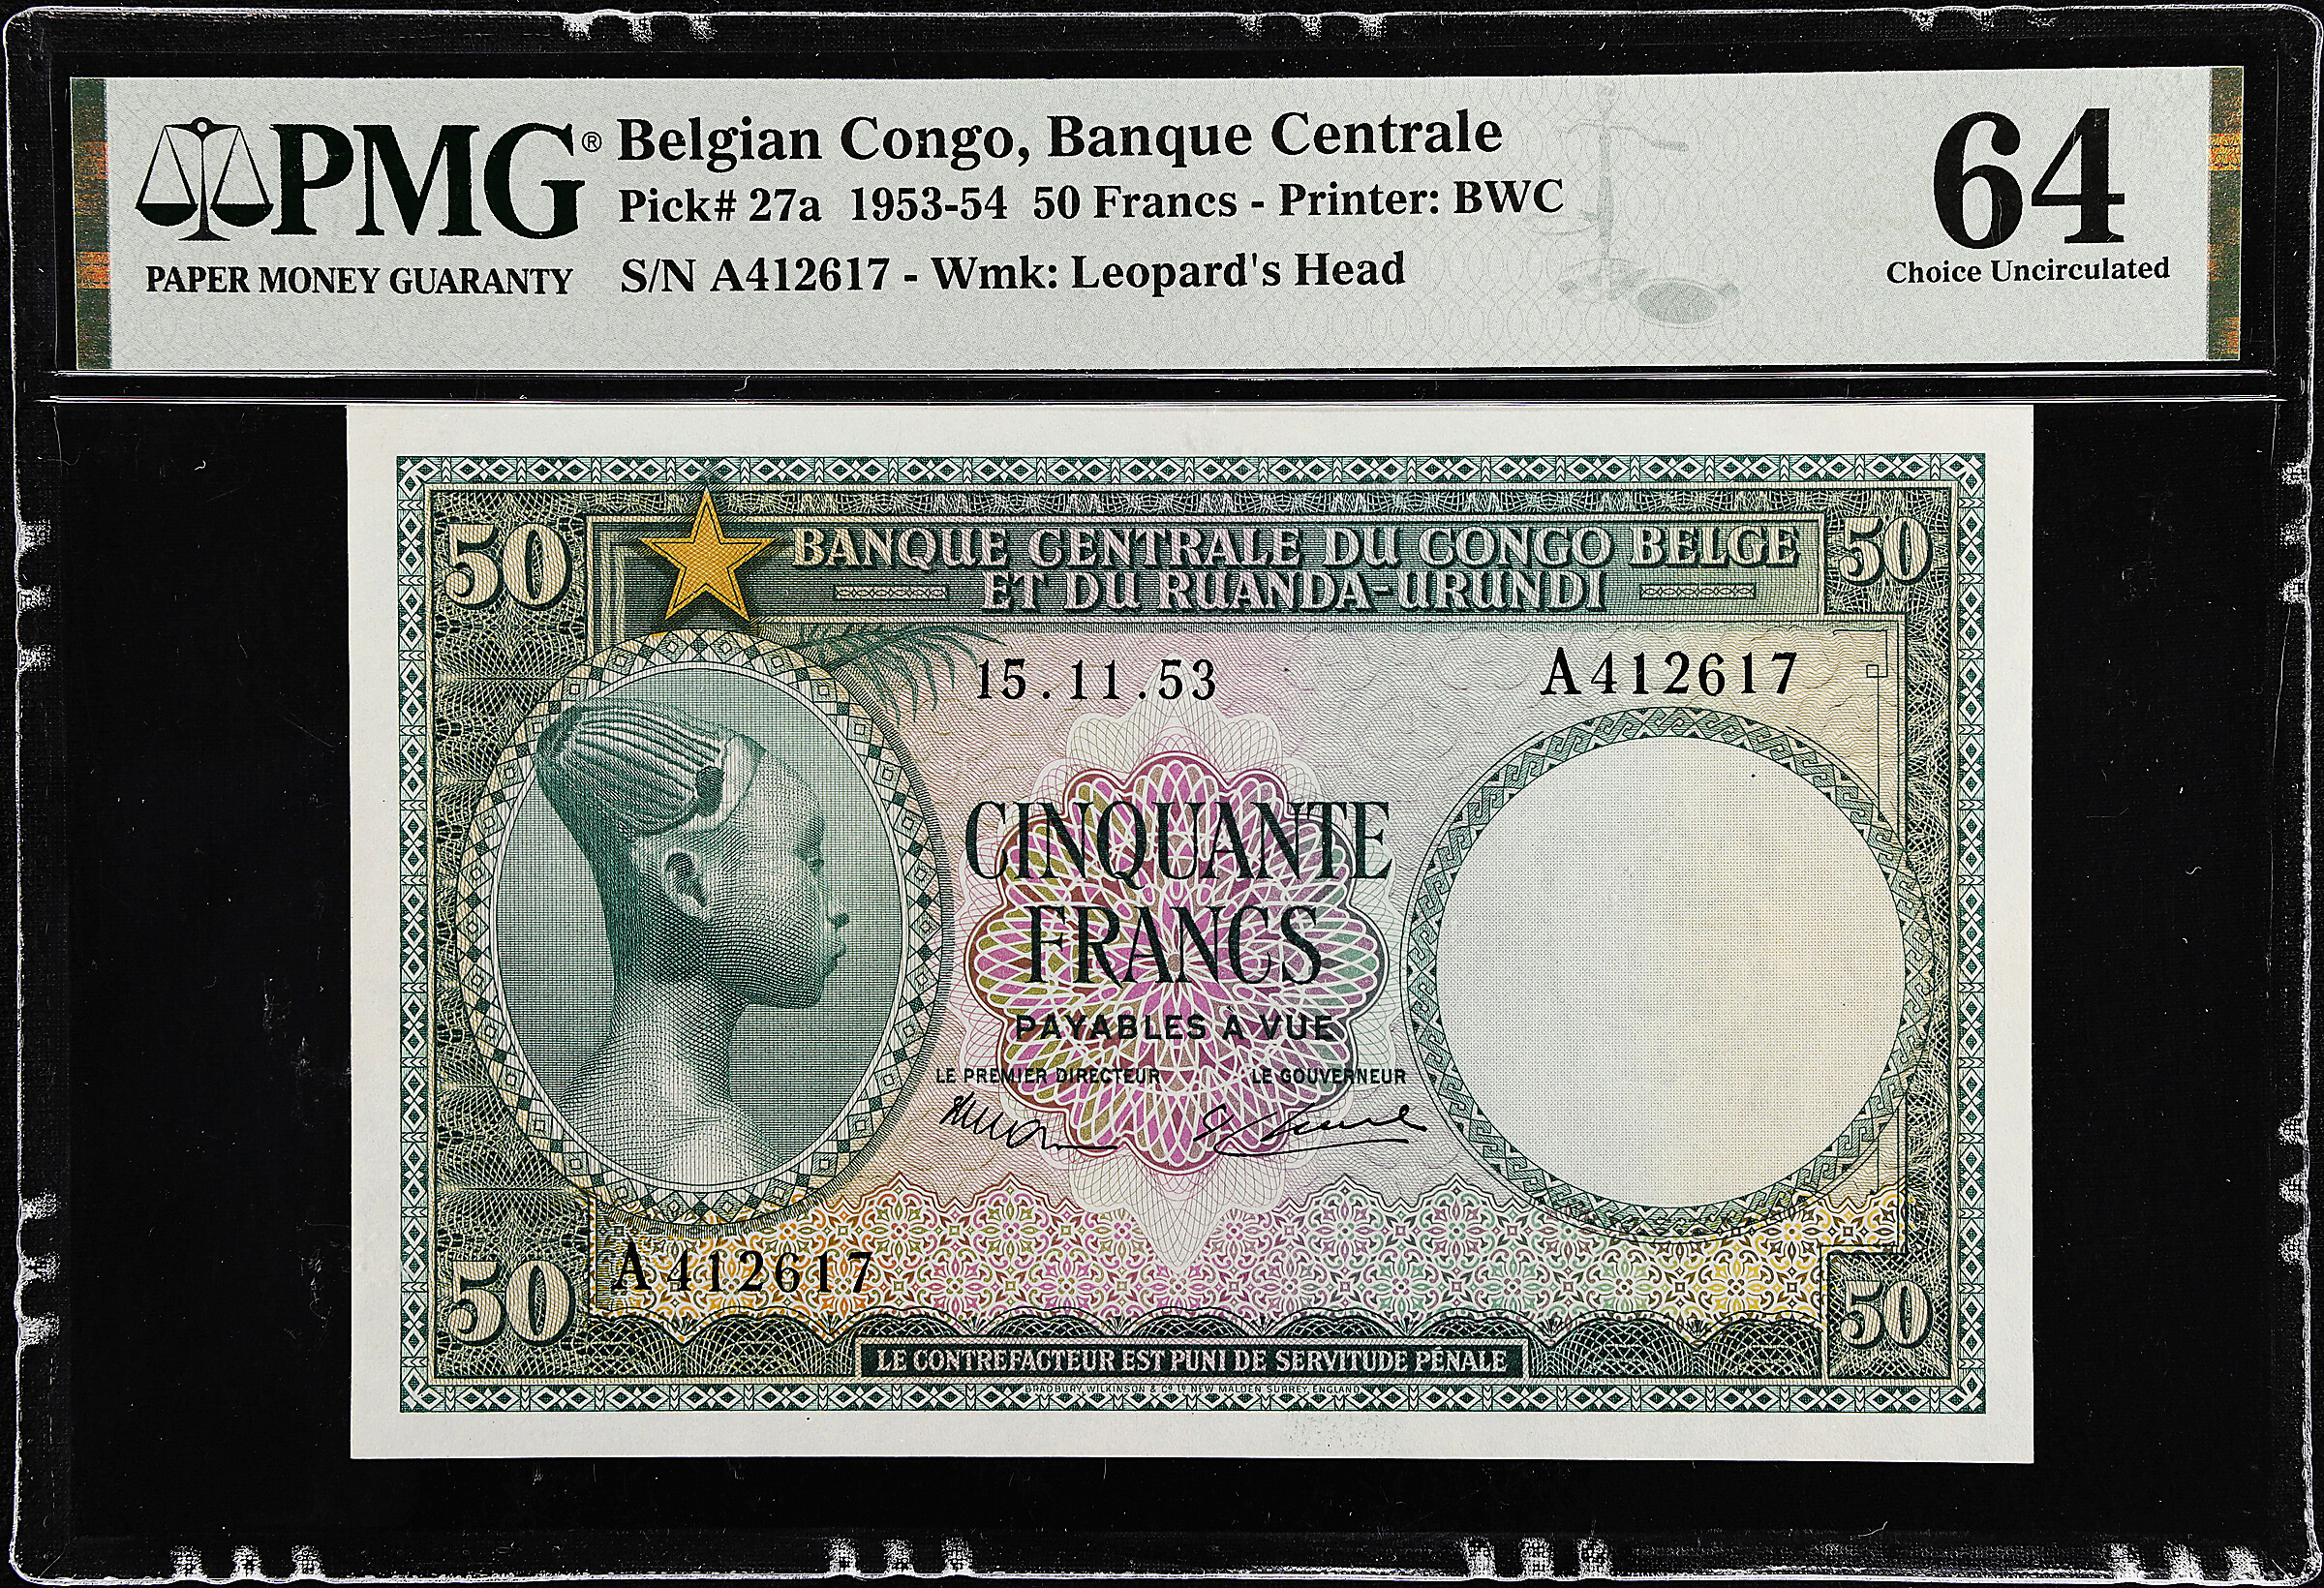 BELGIAN CONGO. Banque Centrale du Congo Belge et du Ruanda-Urundi. 50 Francs